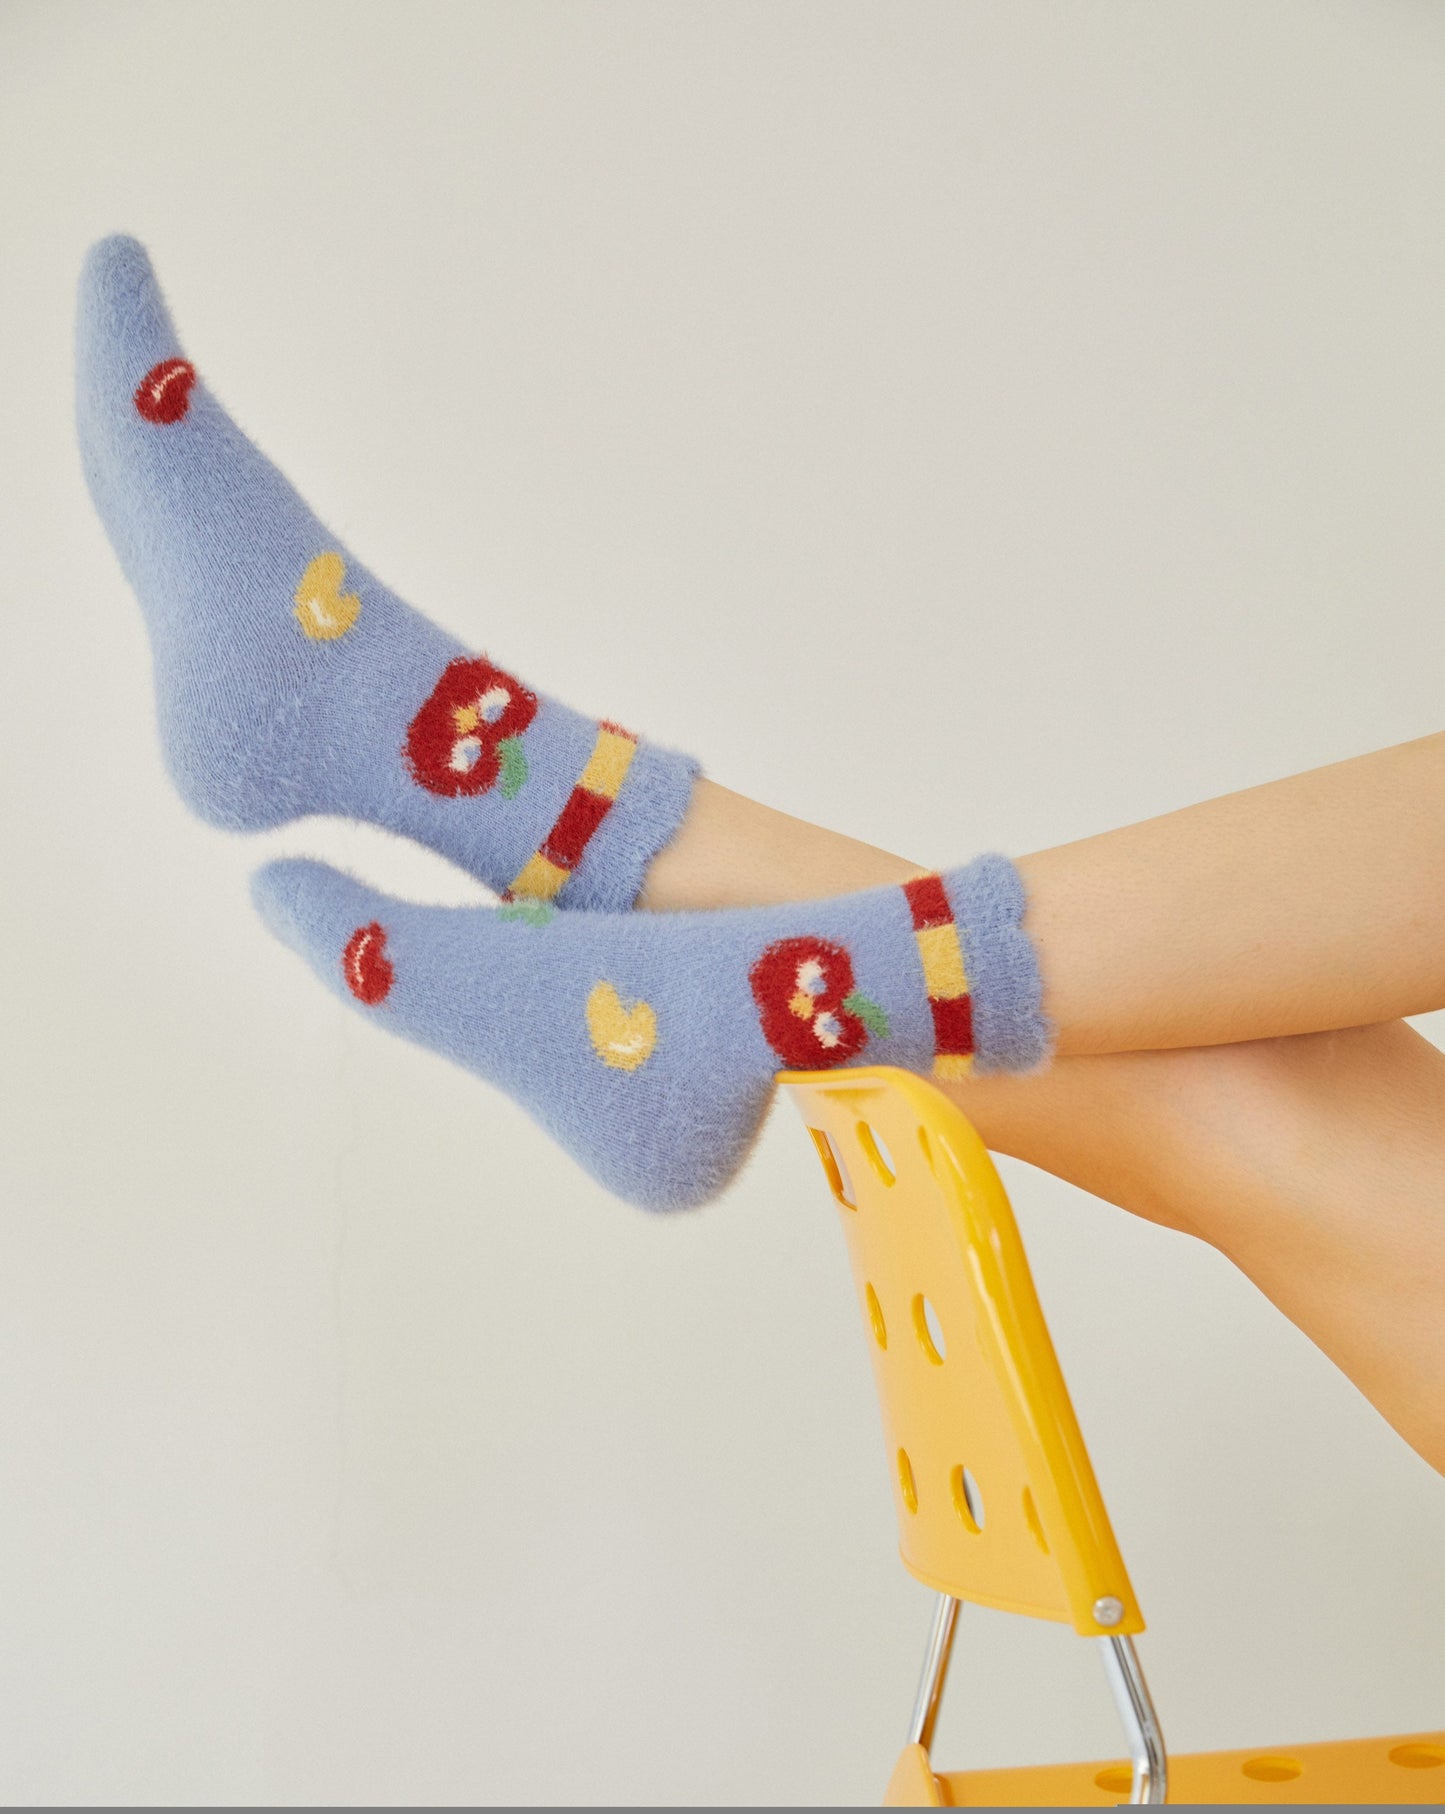 Miss June’s | Women’s | 1 pair | Sleep socks | Cute | Fuzzy | Home wear | Warm | Soft | Gift Idea | Casual | Cozy| Animals| Comfort | Winter